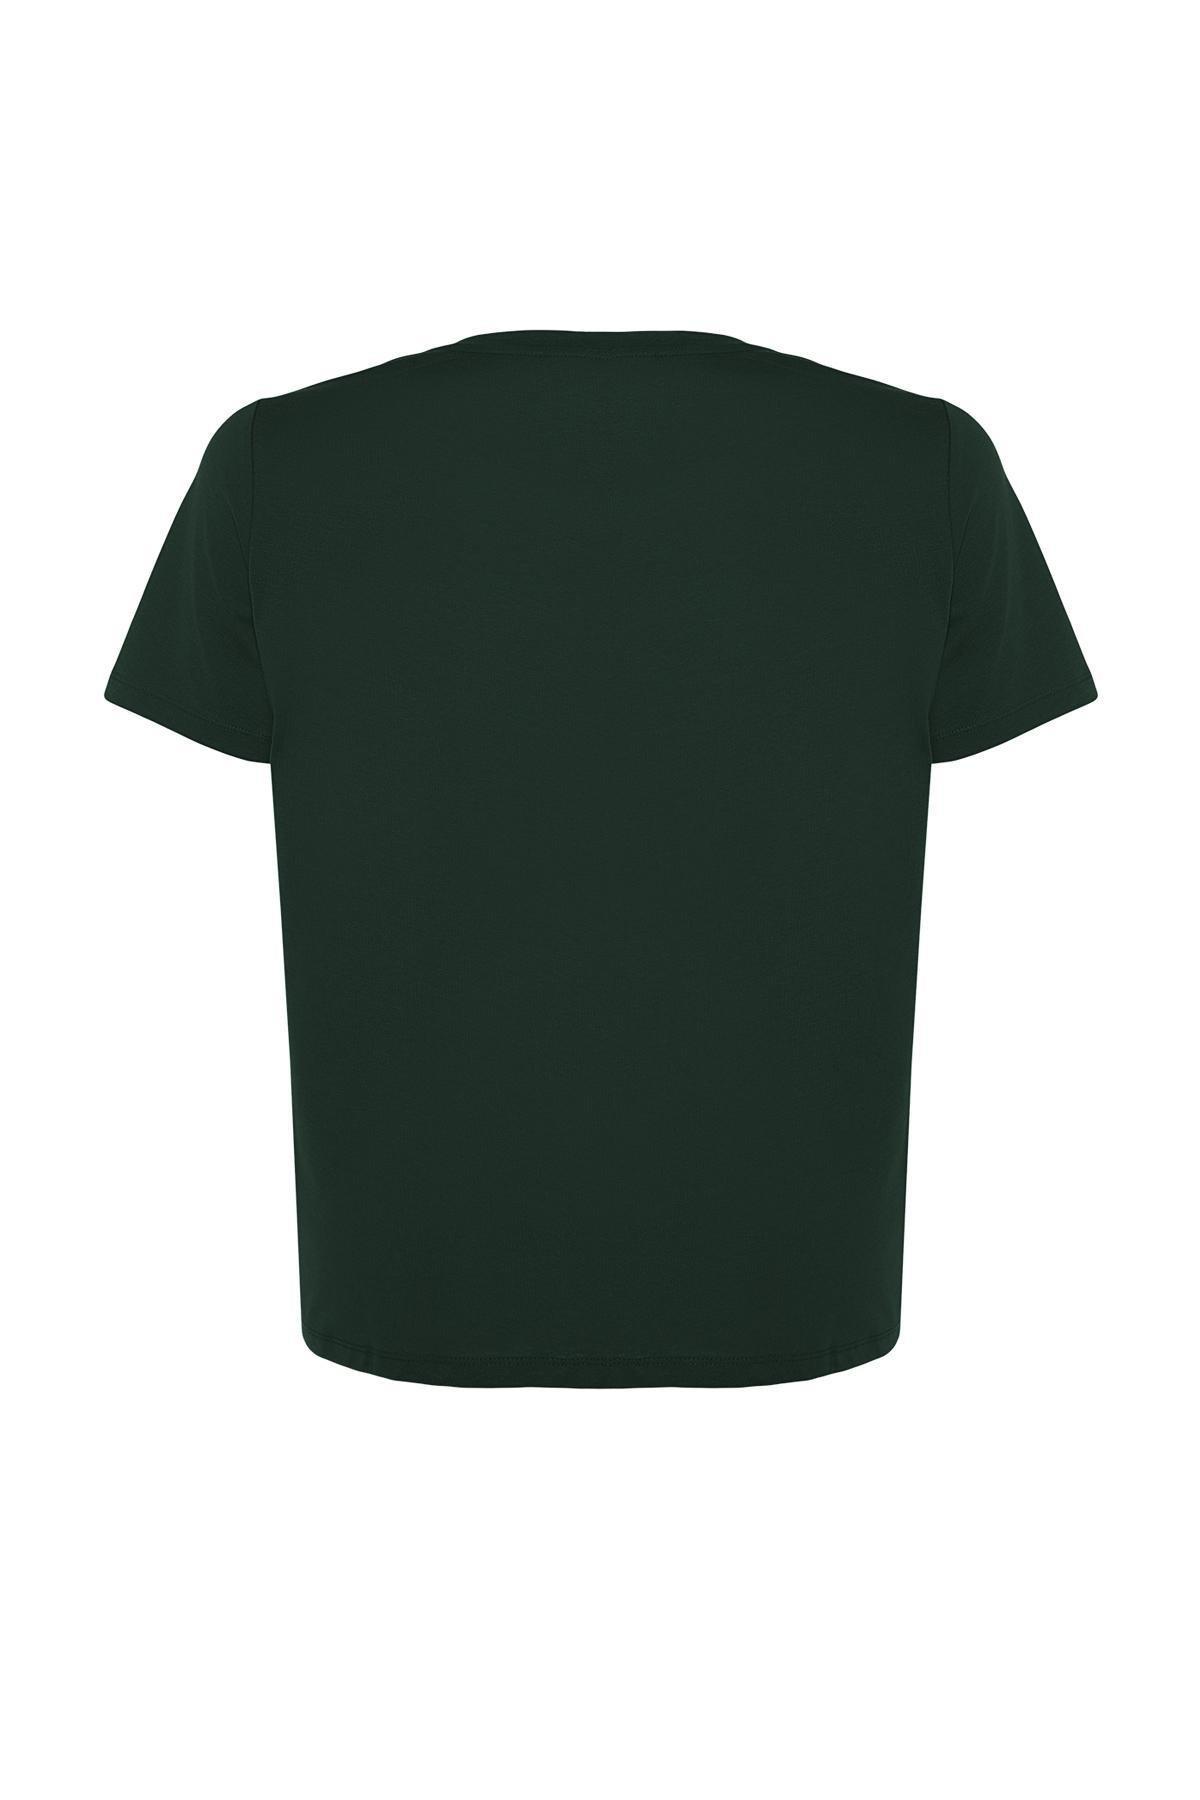 Trendyol - Green Crew Neck Plus Size Tshirt